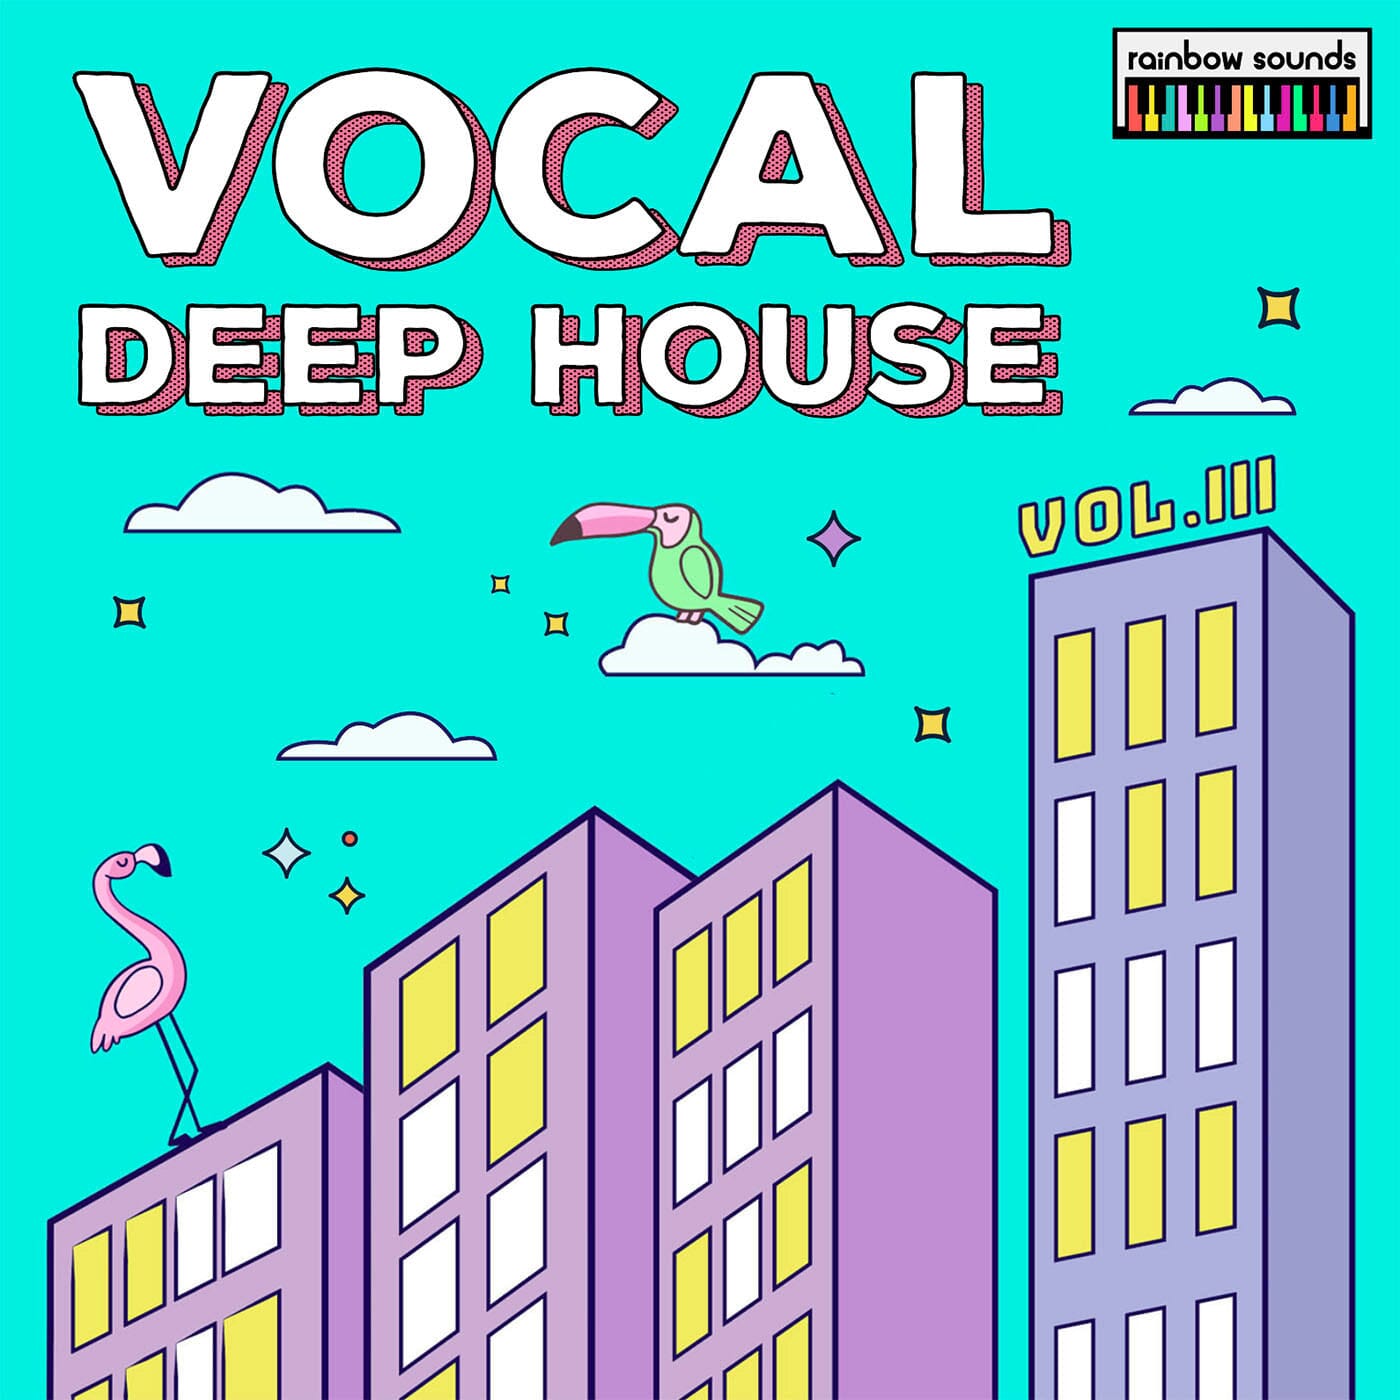 Vocal Deep House vol.3 (Construction Kits, MIDI, One Shots) Sample Pack Rainbow Sounds